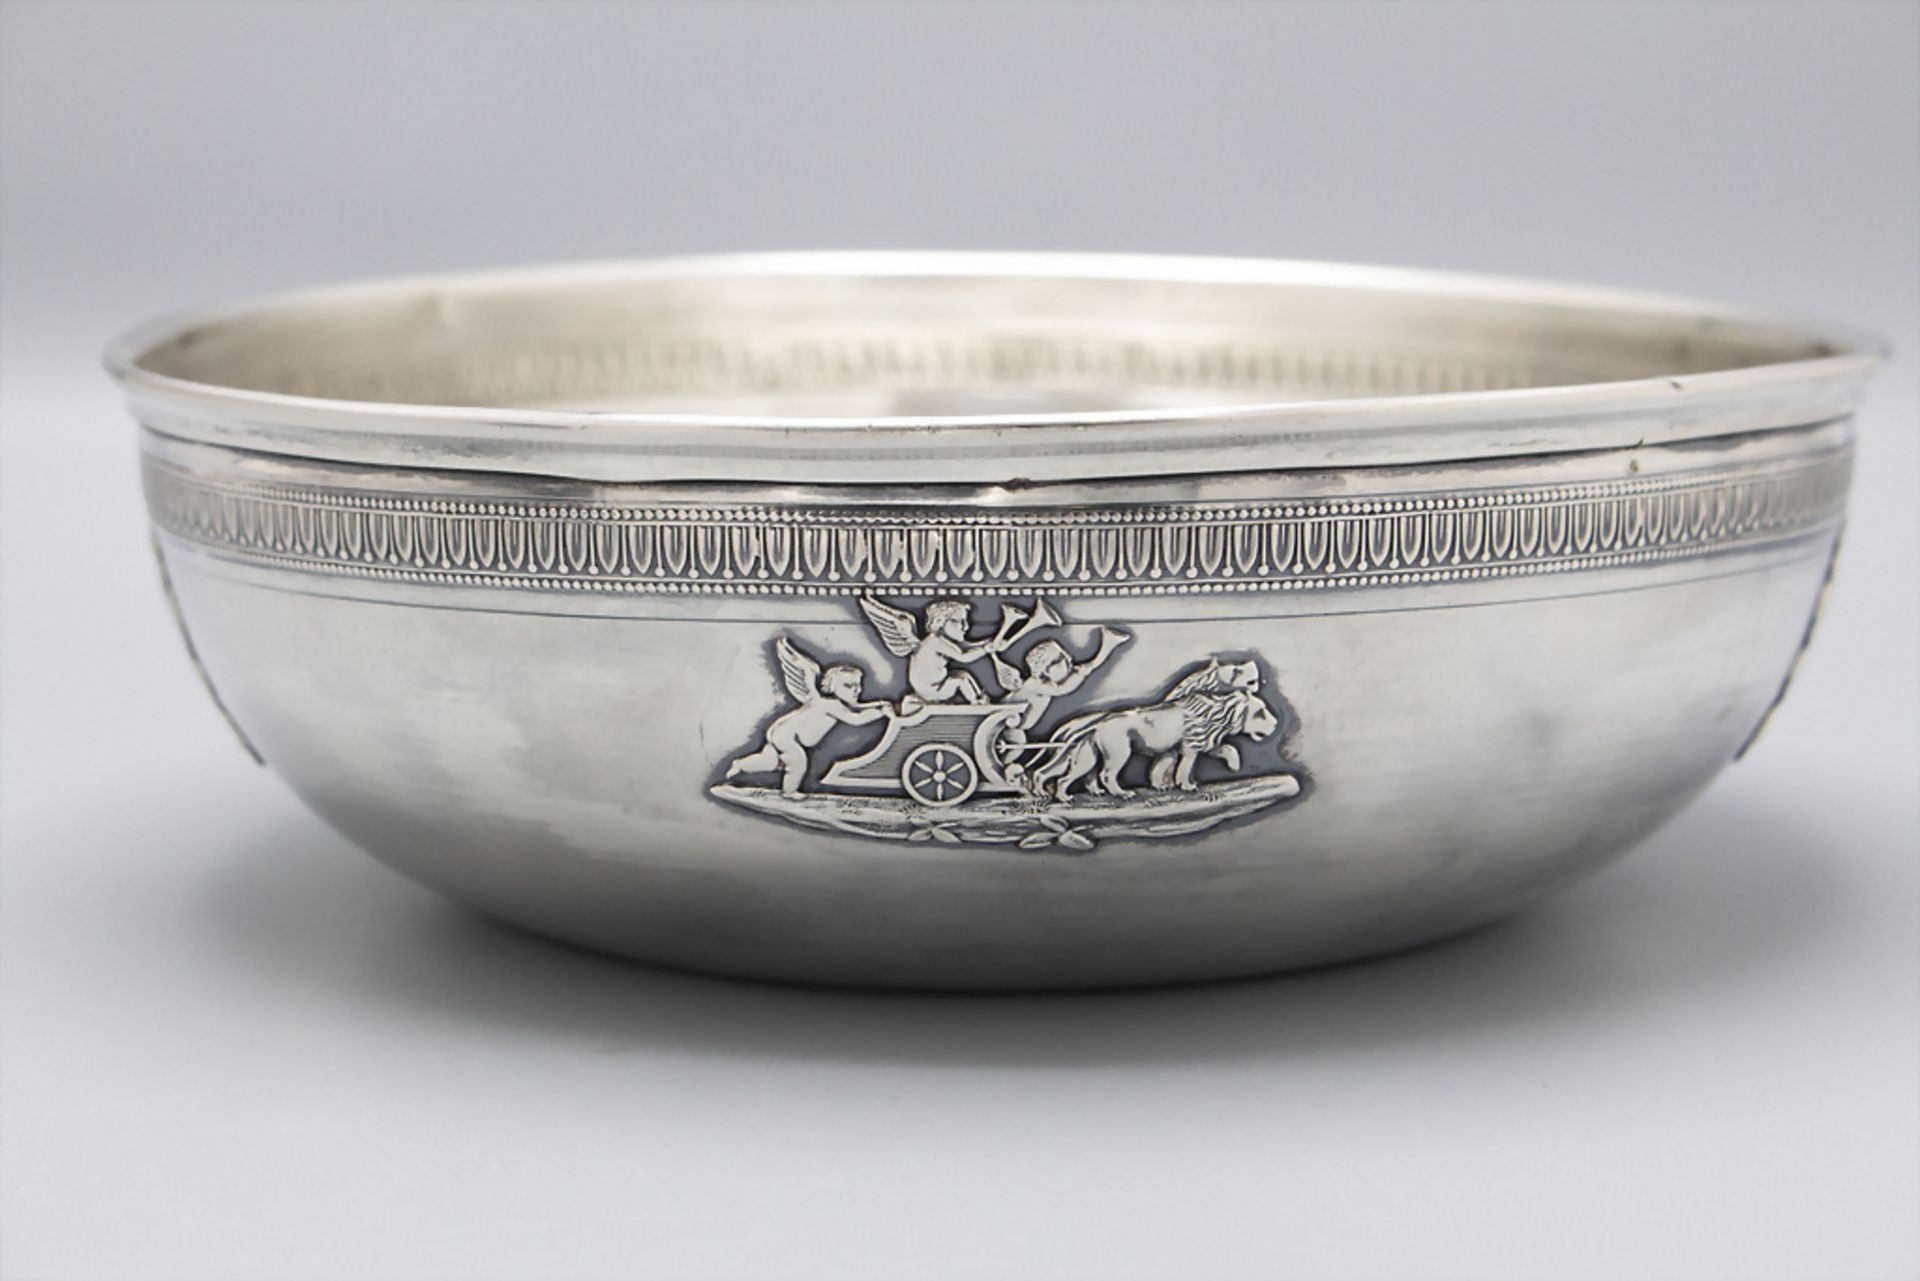 Silber Schale / A silver bowl, V. Boivin, Paris, um 1910 - Bild 4 aus 7